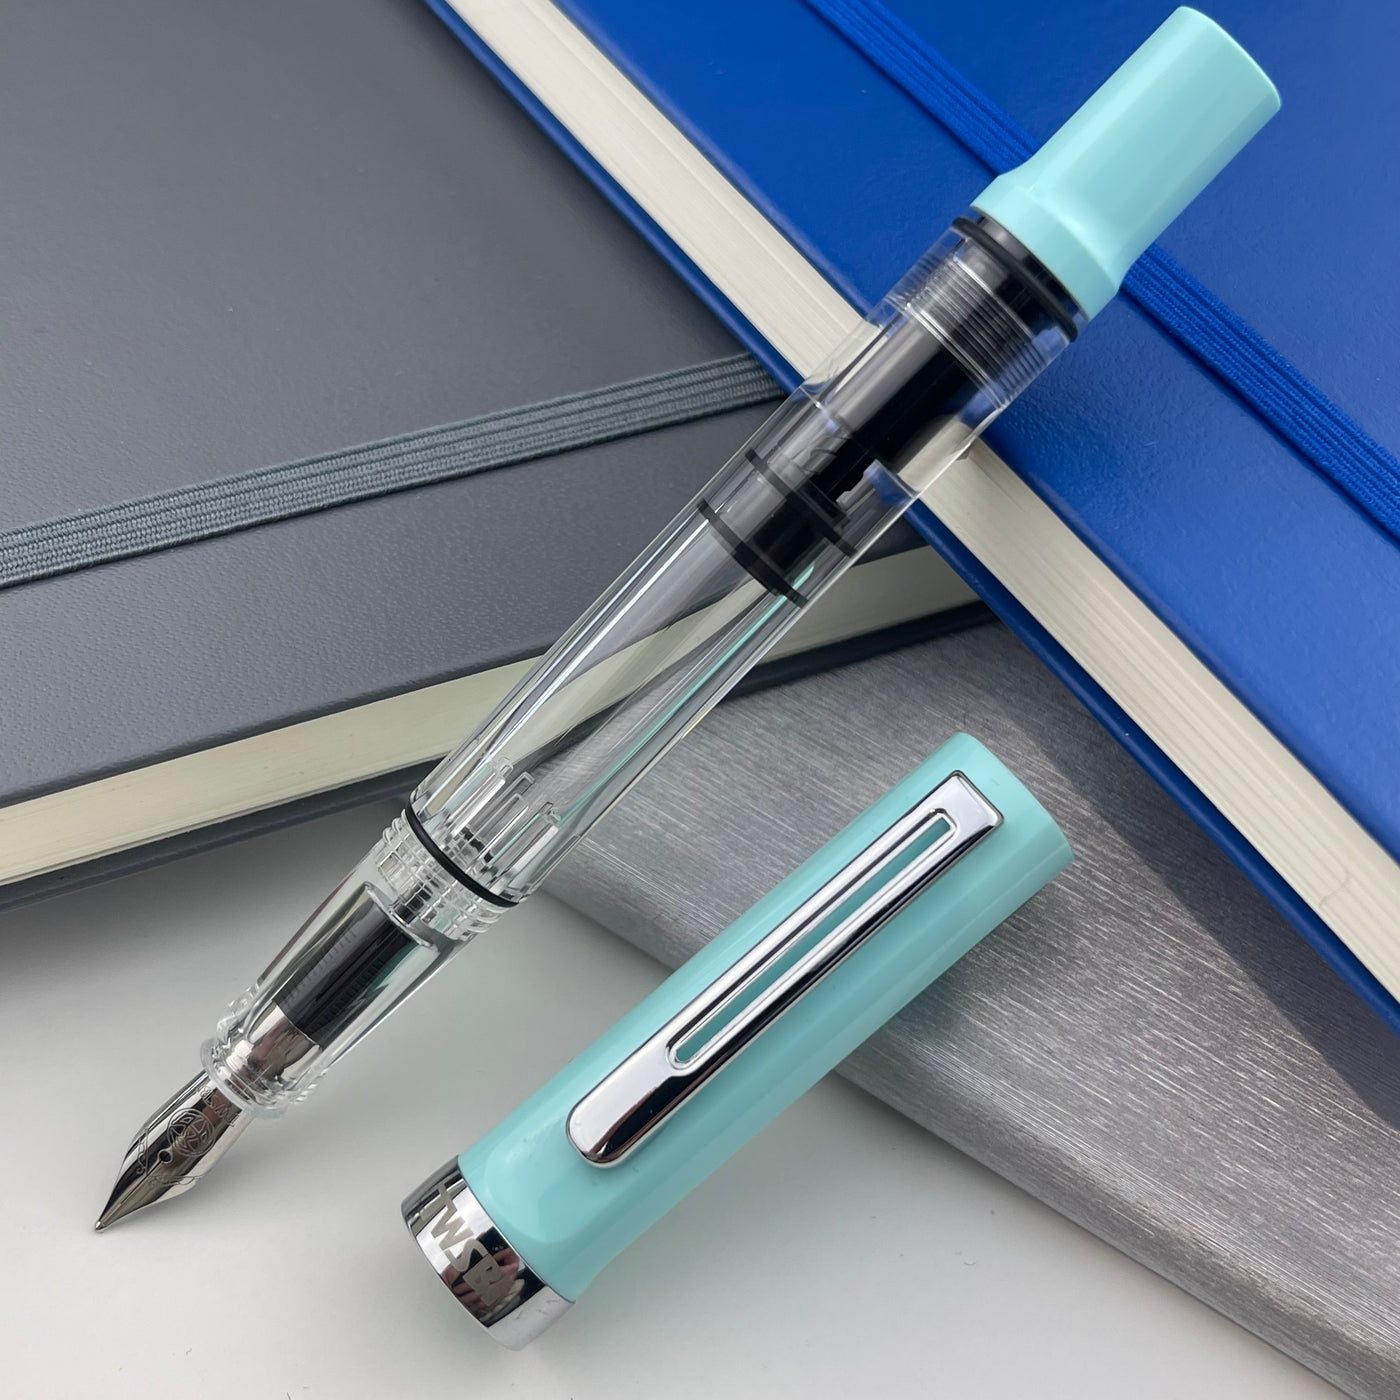 TWSBI ECO Cerulean Blue Fountain Pen